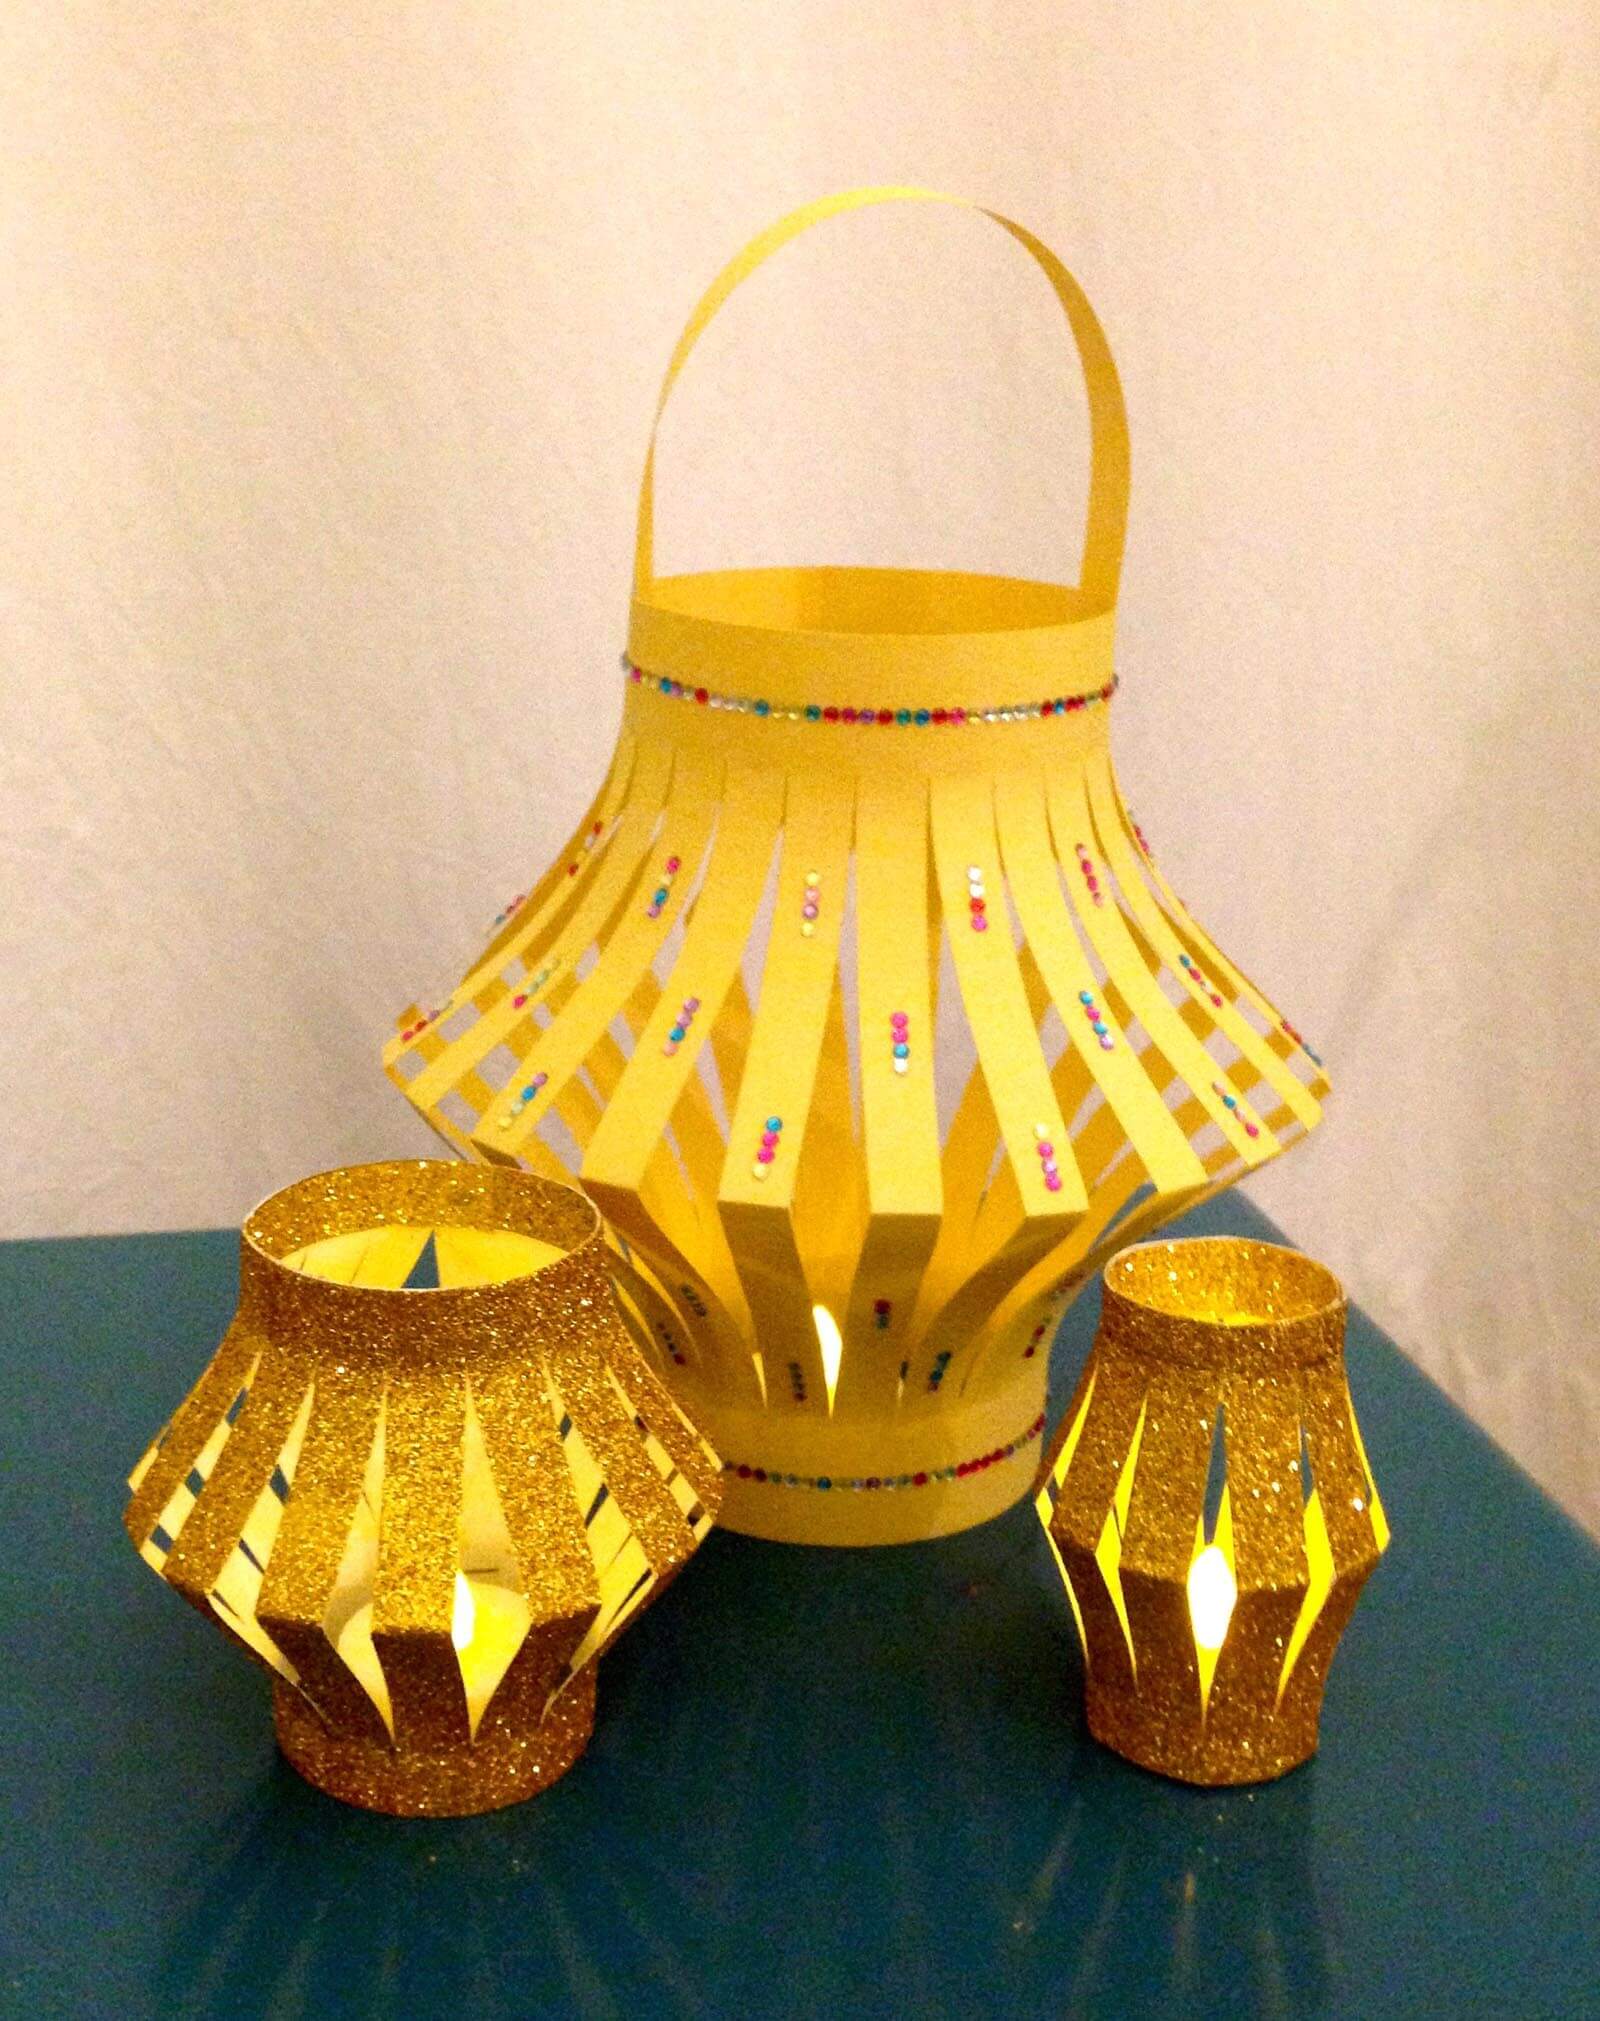 DIY: How To Make A Table Top Paper Craft Diwali Lantern - ANOKHI LIFE